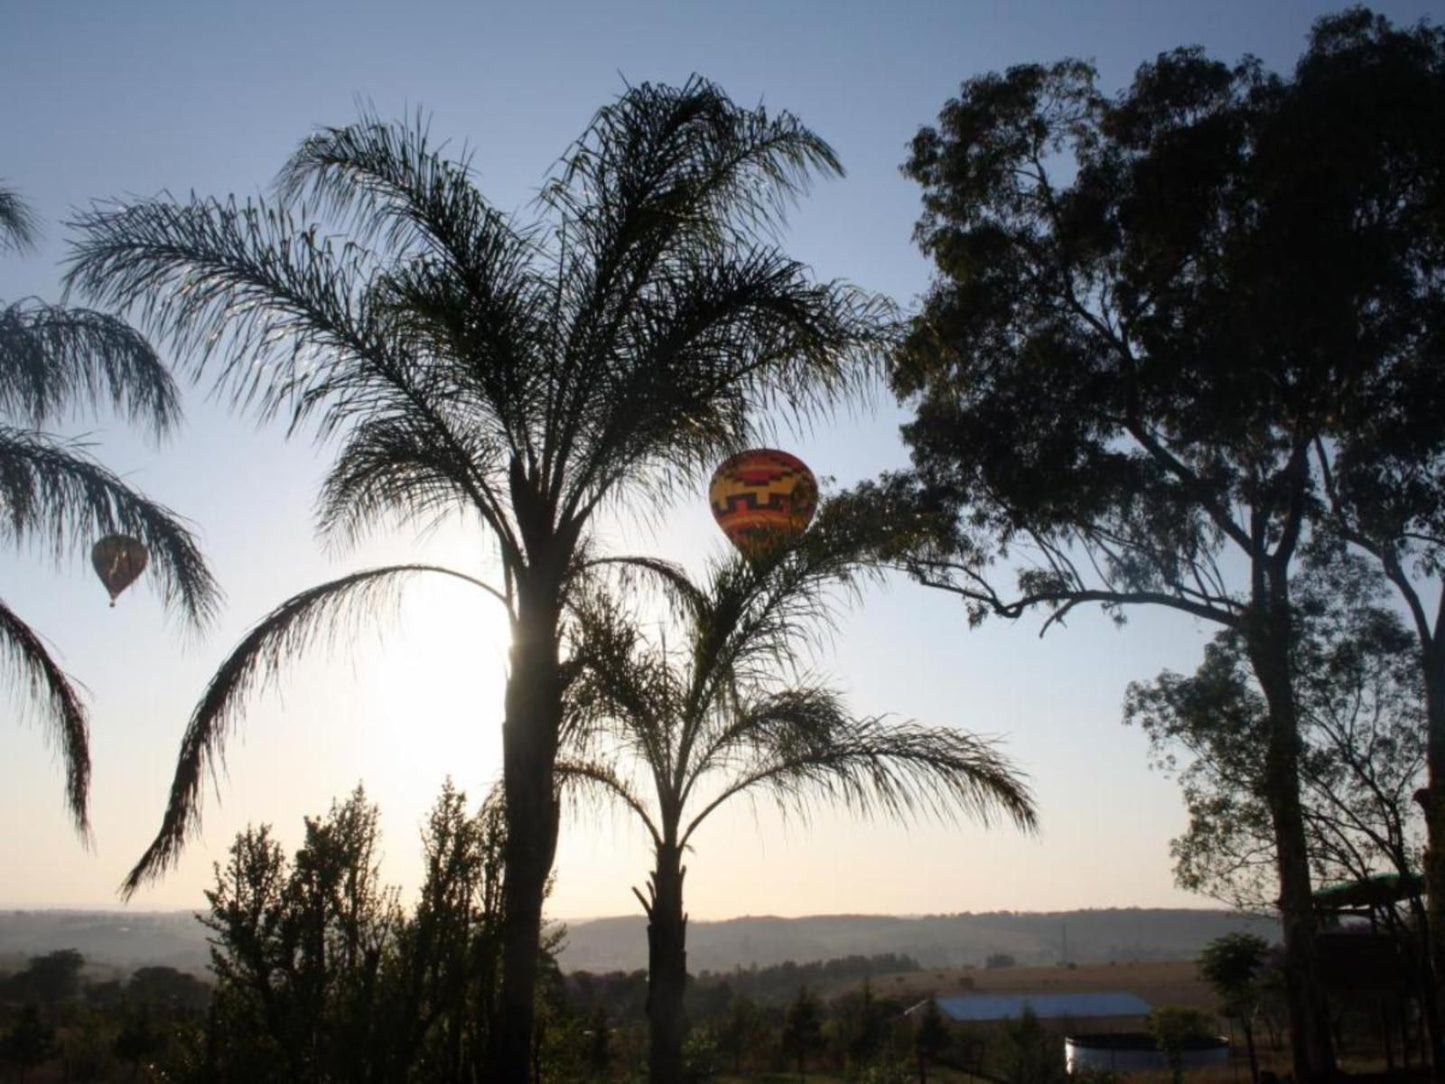 Misty Morn Cottages Muldersdrift Gauteng South Africa Aircraft, Vehicle, Hot Air Balloon, Palm Tree, Plant, Nature, Wood, Sky